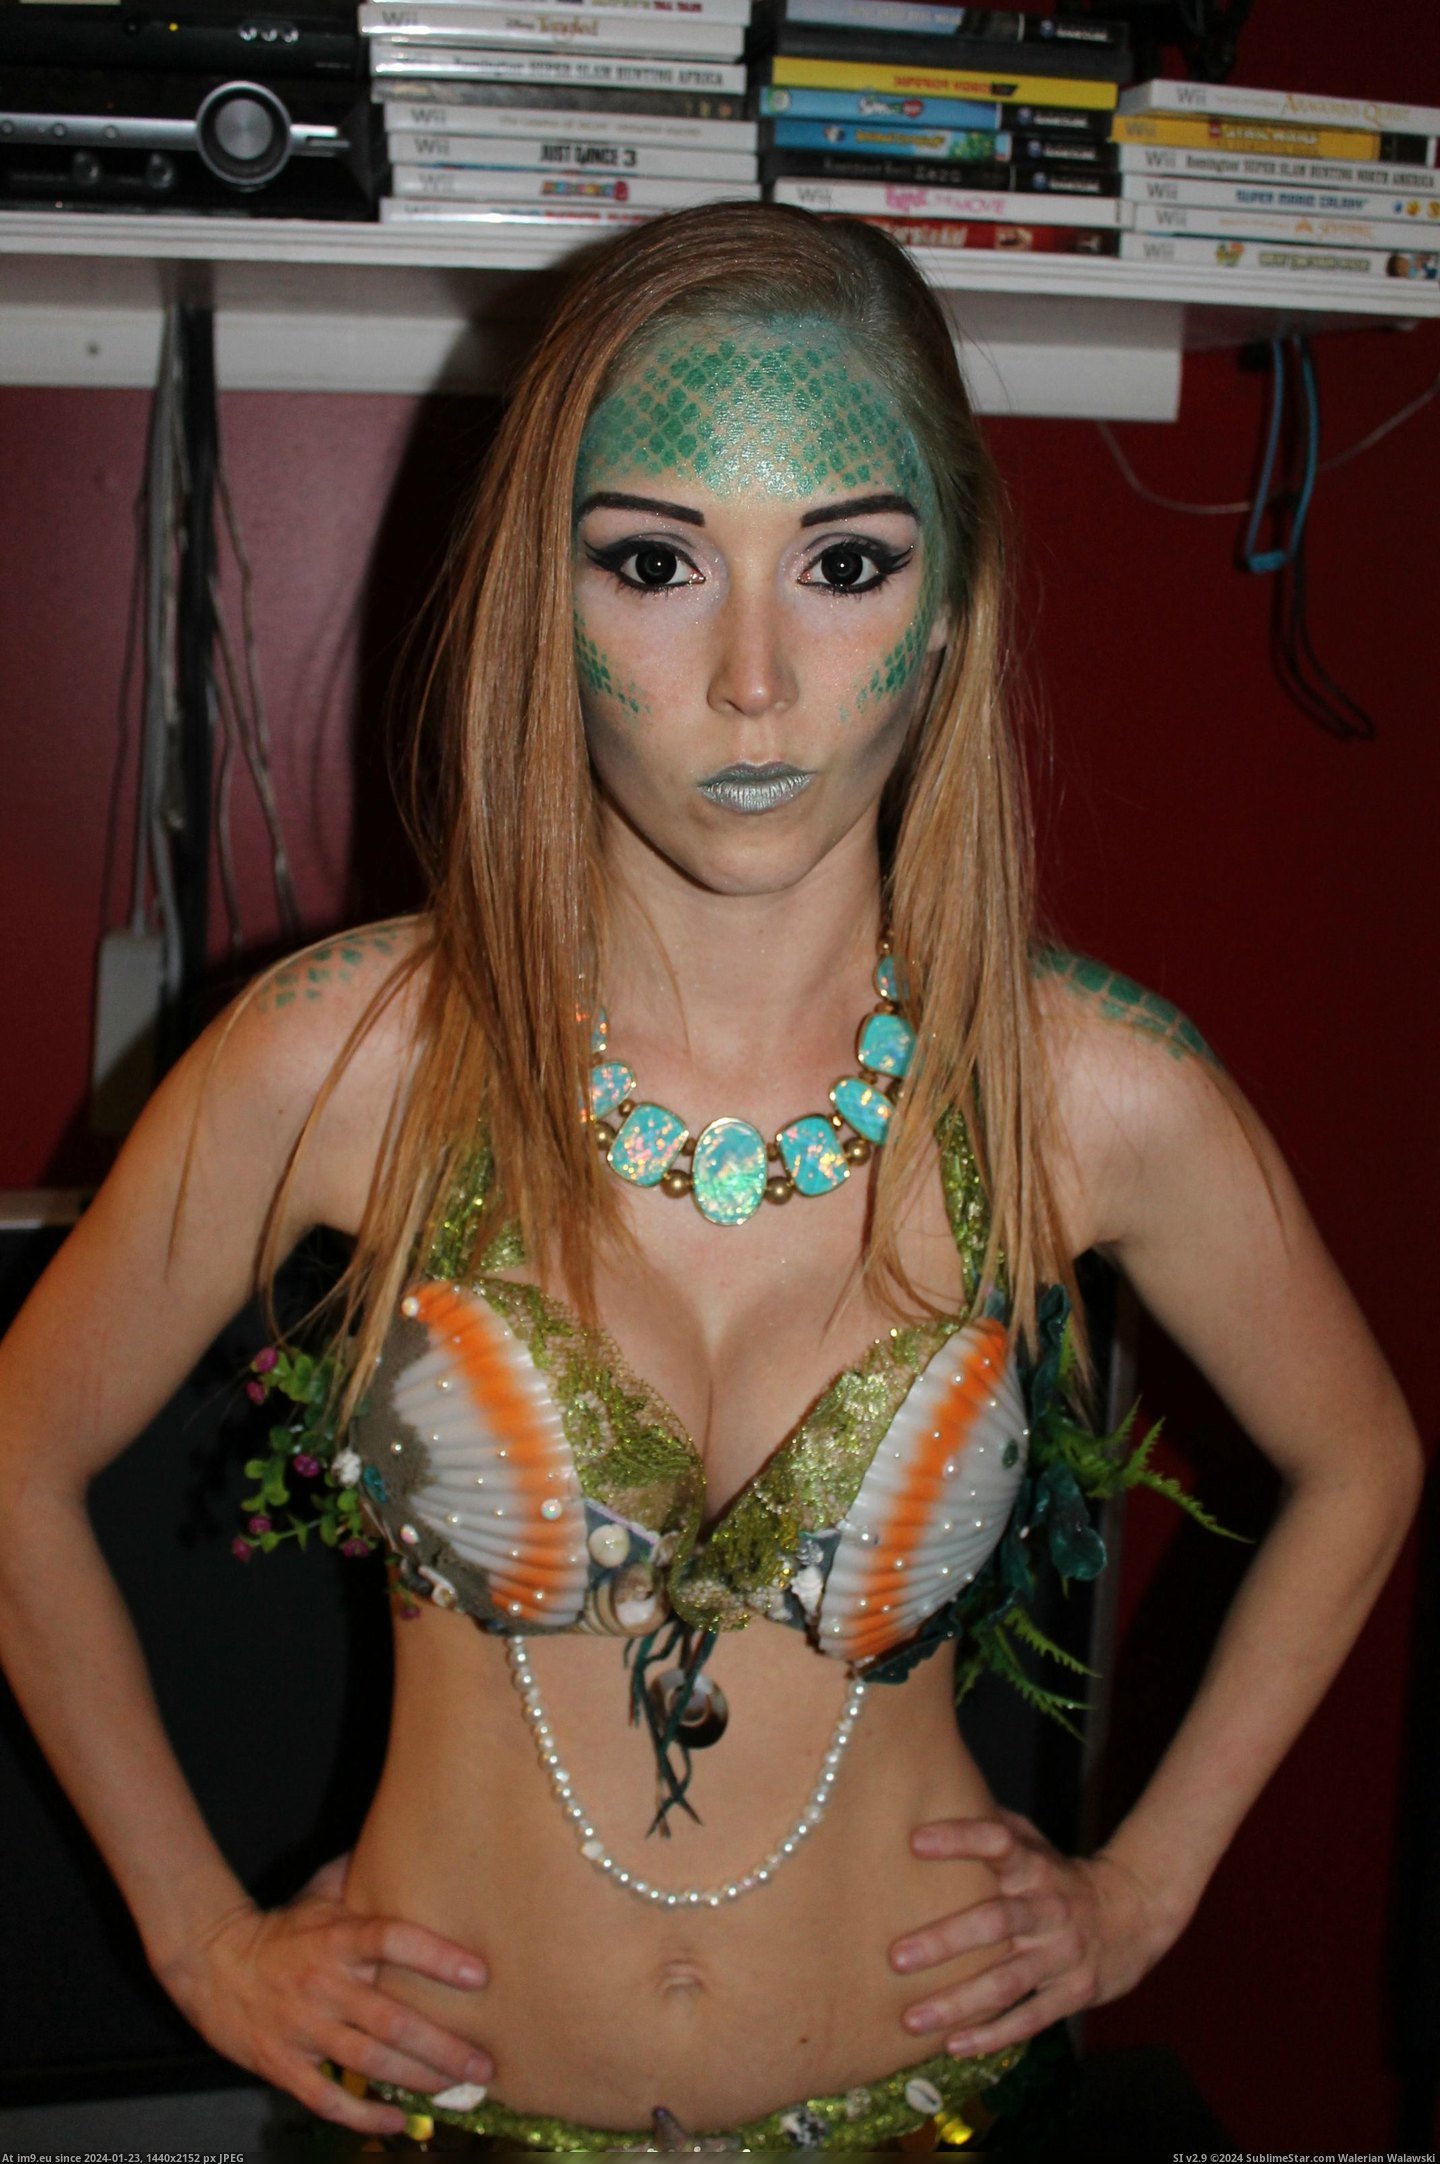 #Costume #Homemade #Mermaid [Pics] My homemade mermaid costume! 6 Pic. (Изображение из альбом My r/PICS favs))